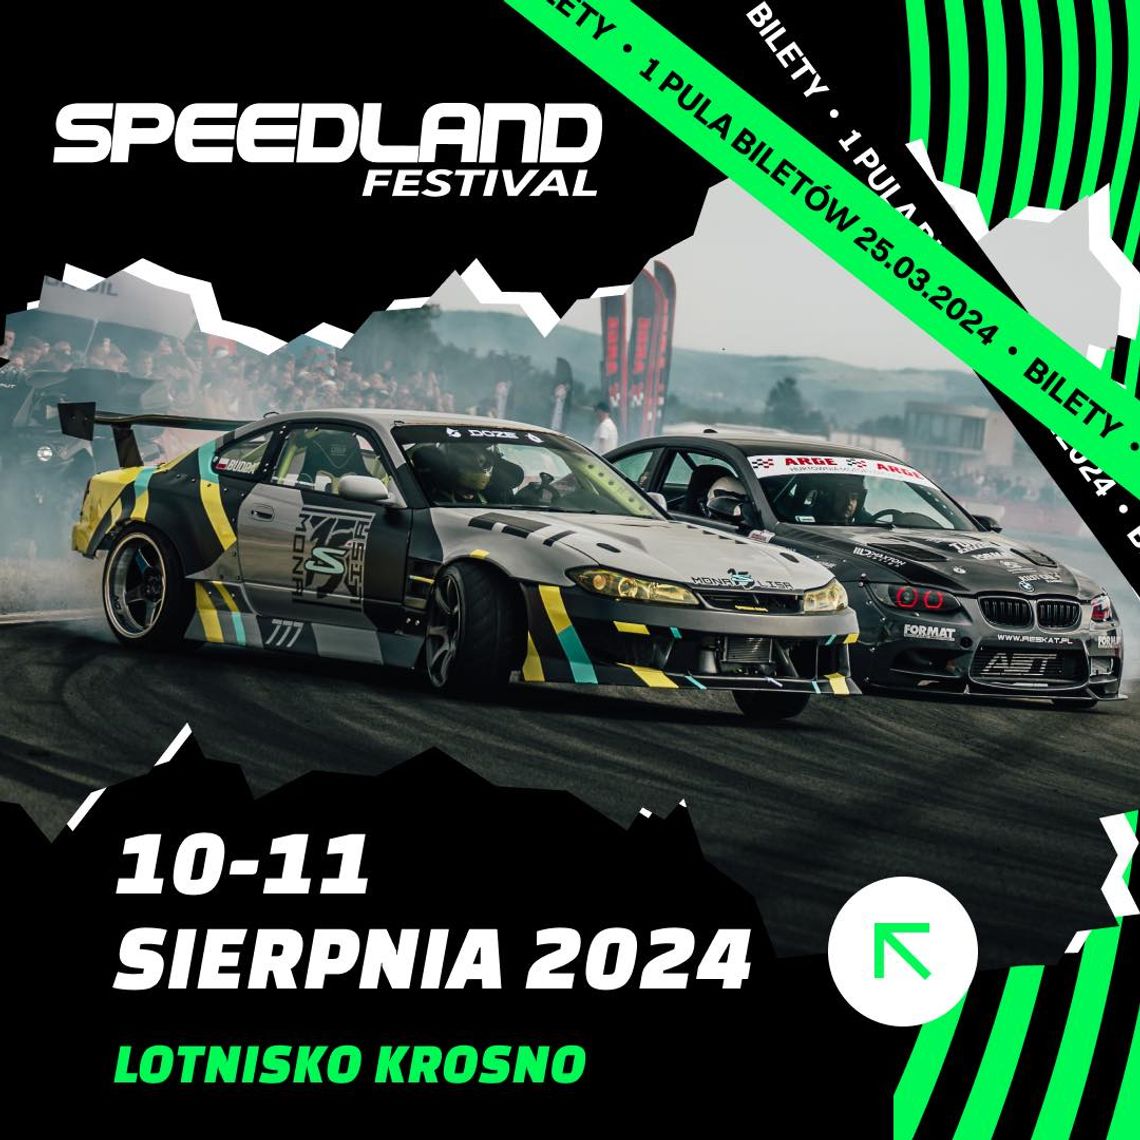 Speedland Festival